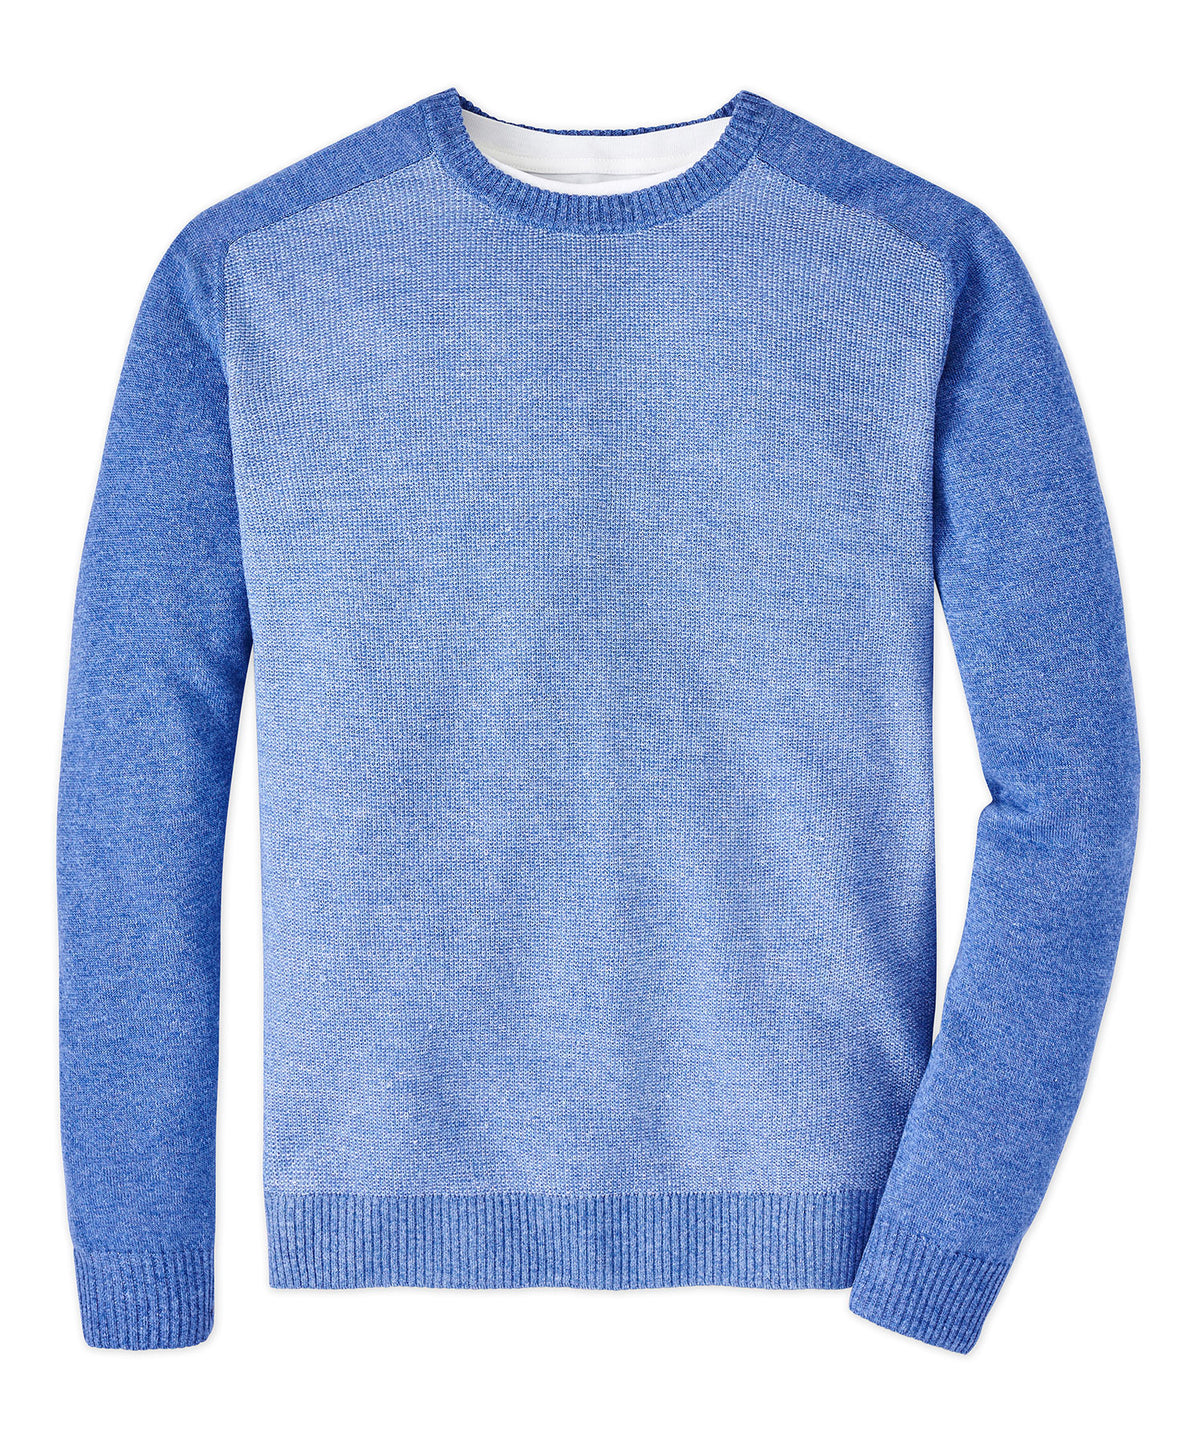 Peter Millar Stafford Crew Neck Sweater